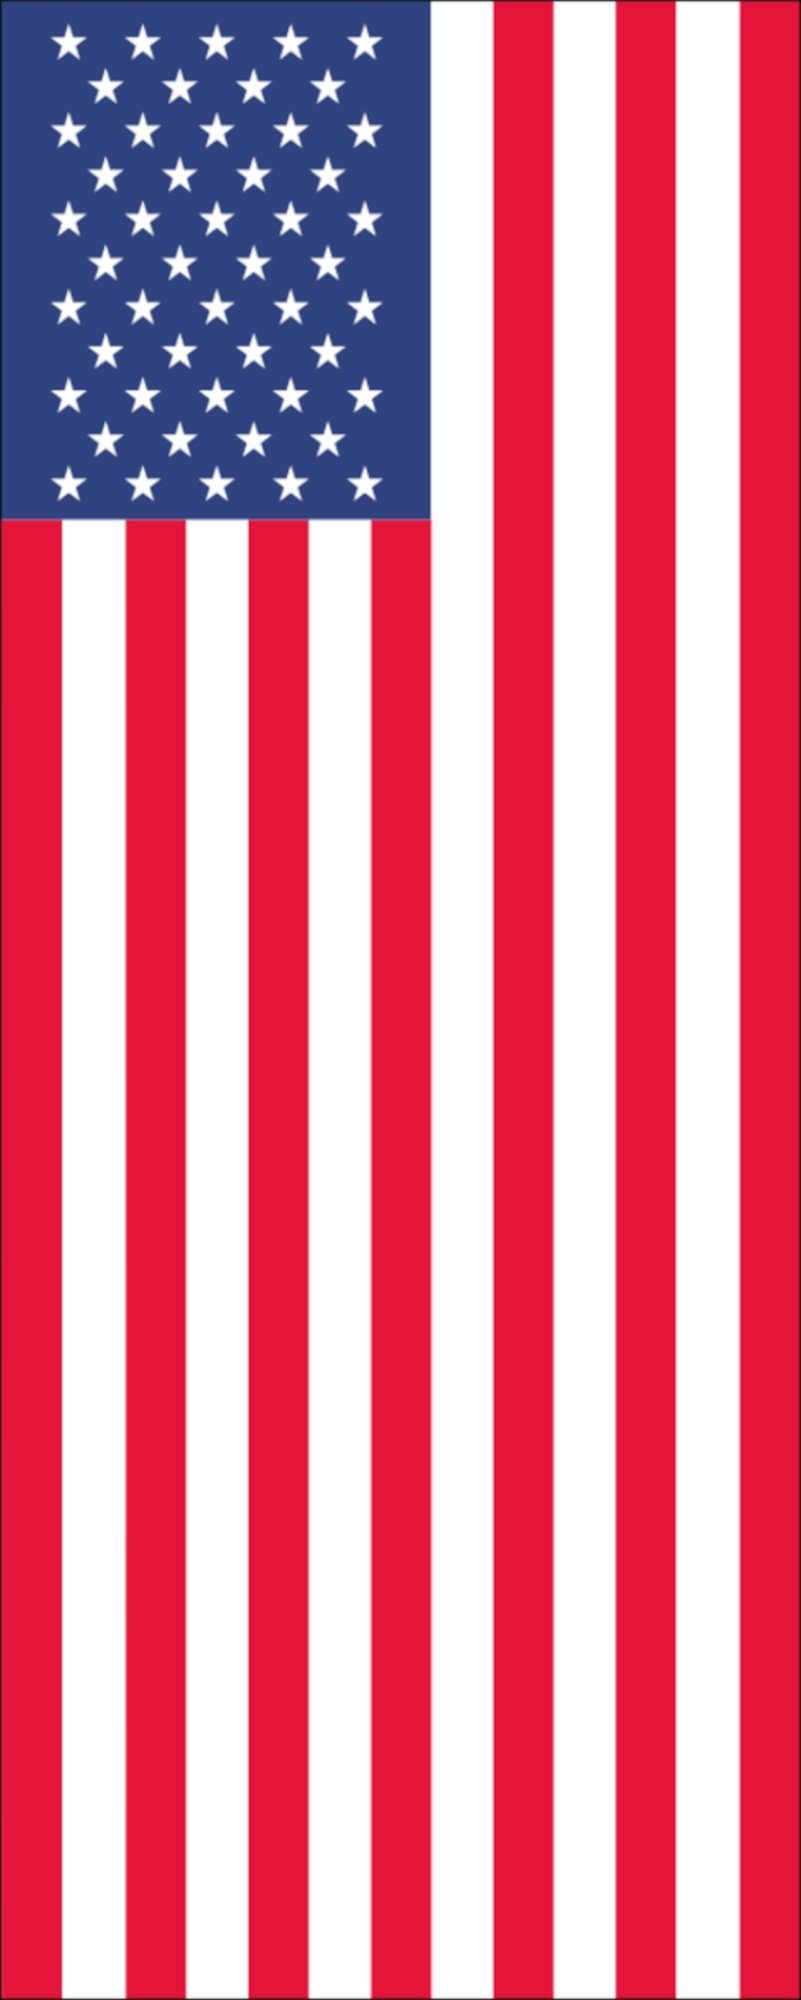 Flagge Hochformat 110 Flagge USA flaggenmeer g/m²